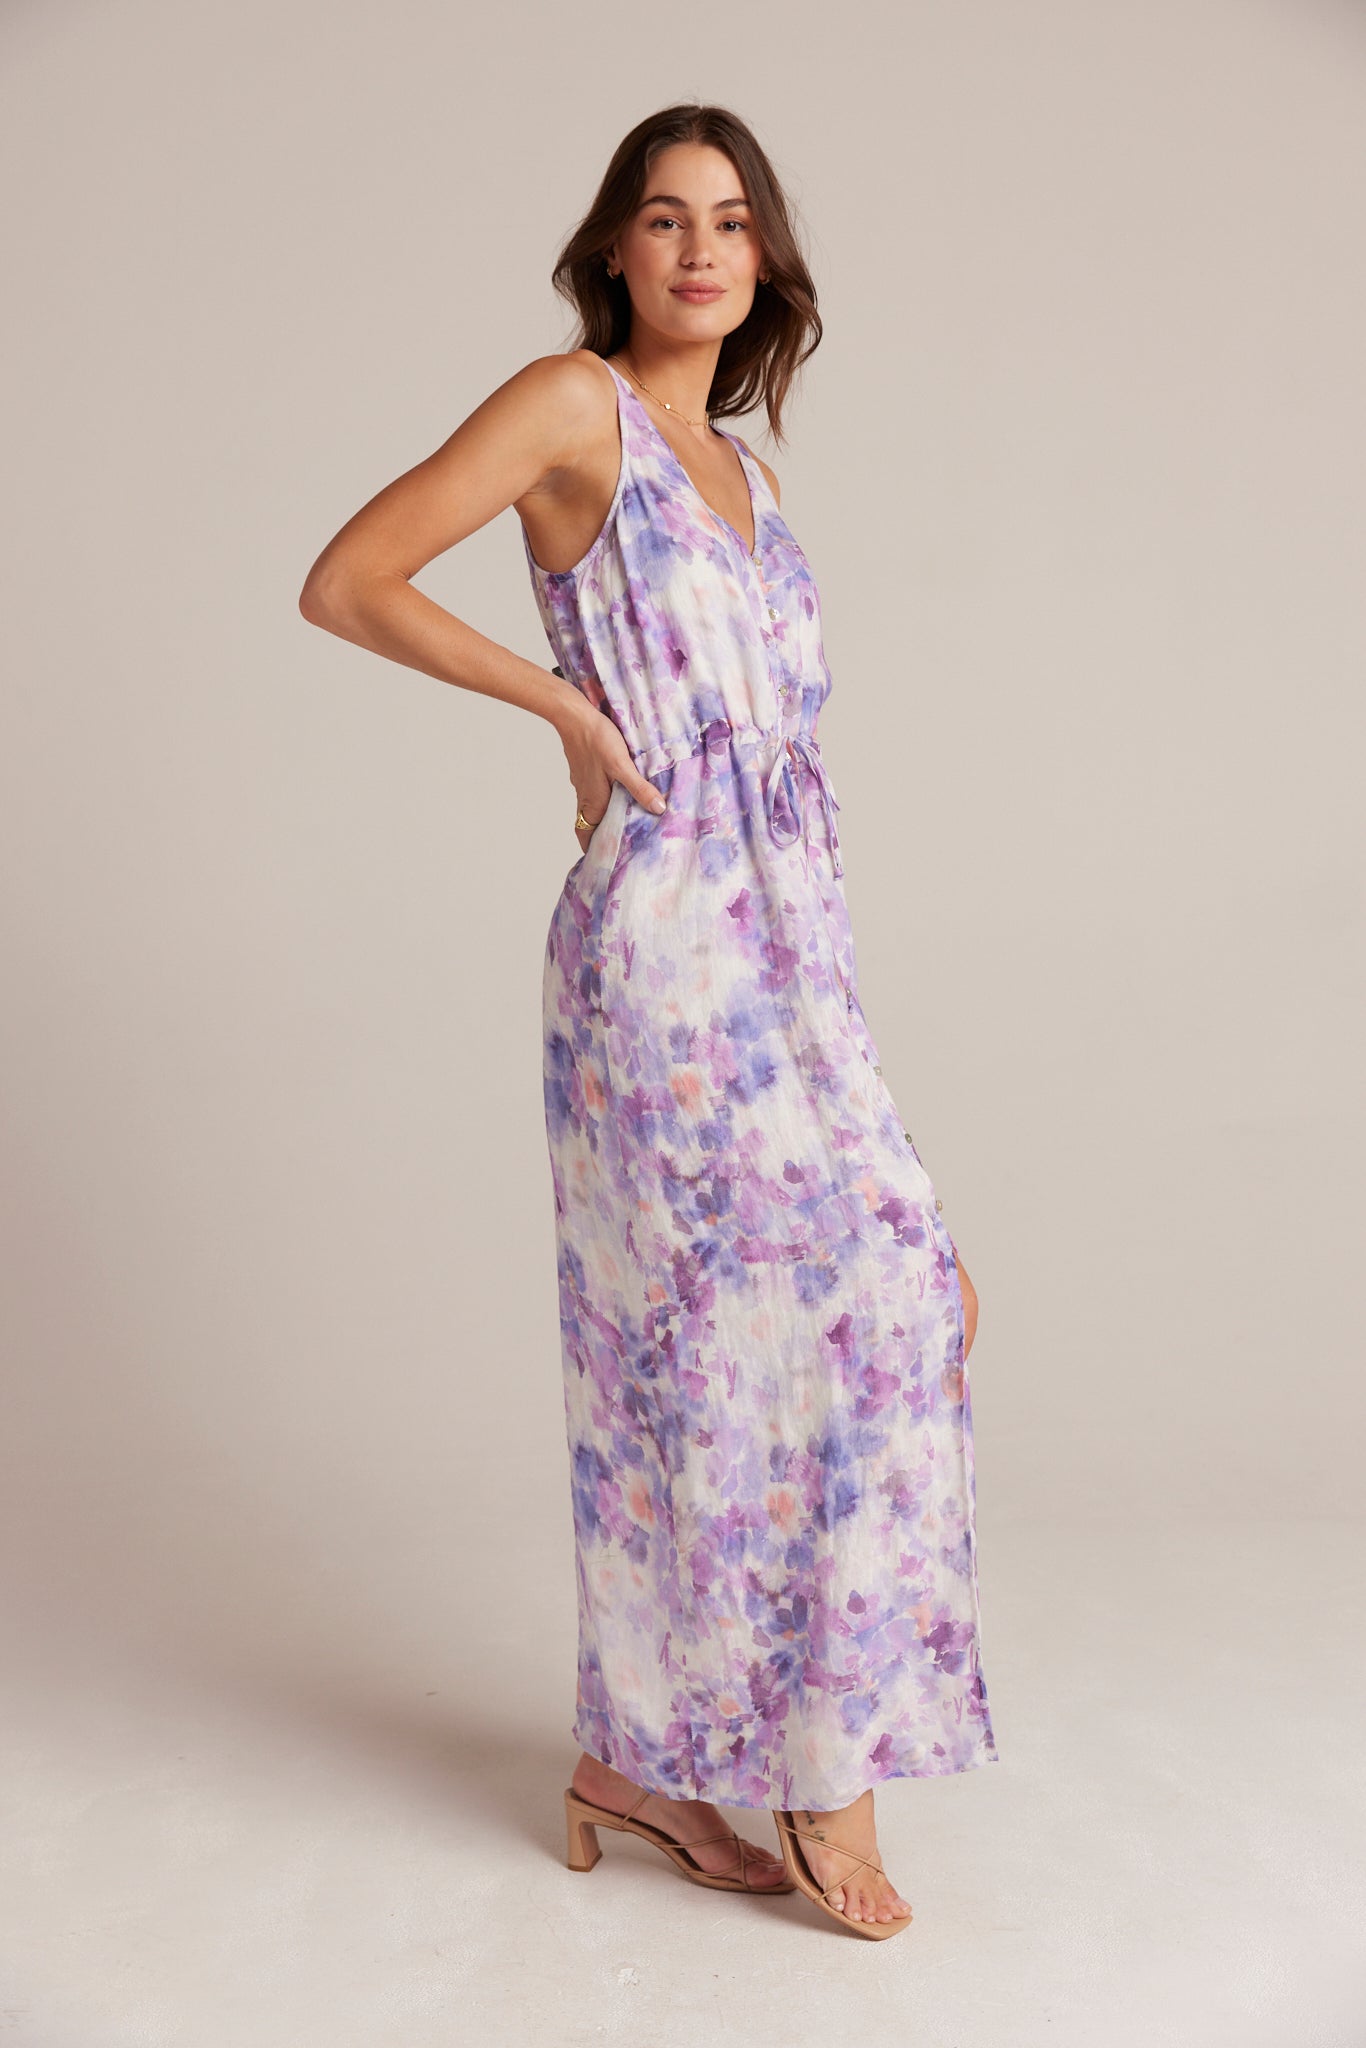 Bella DahlLinen Button Front Dress - Iris Floral PrintDresses